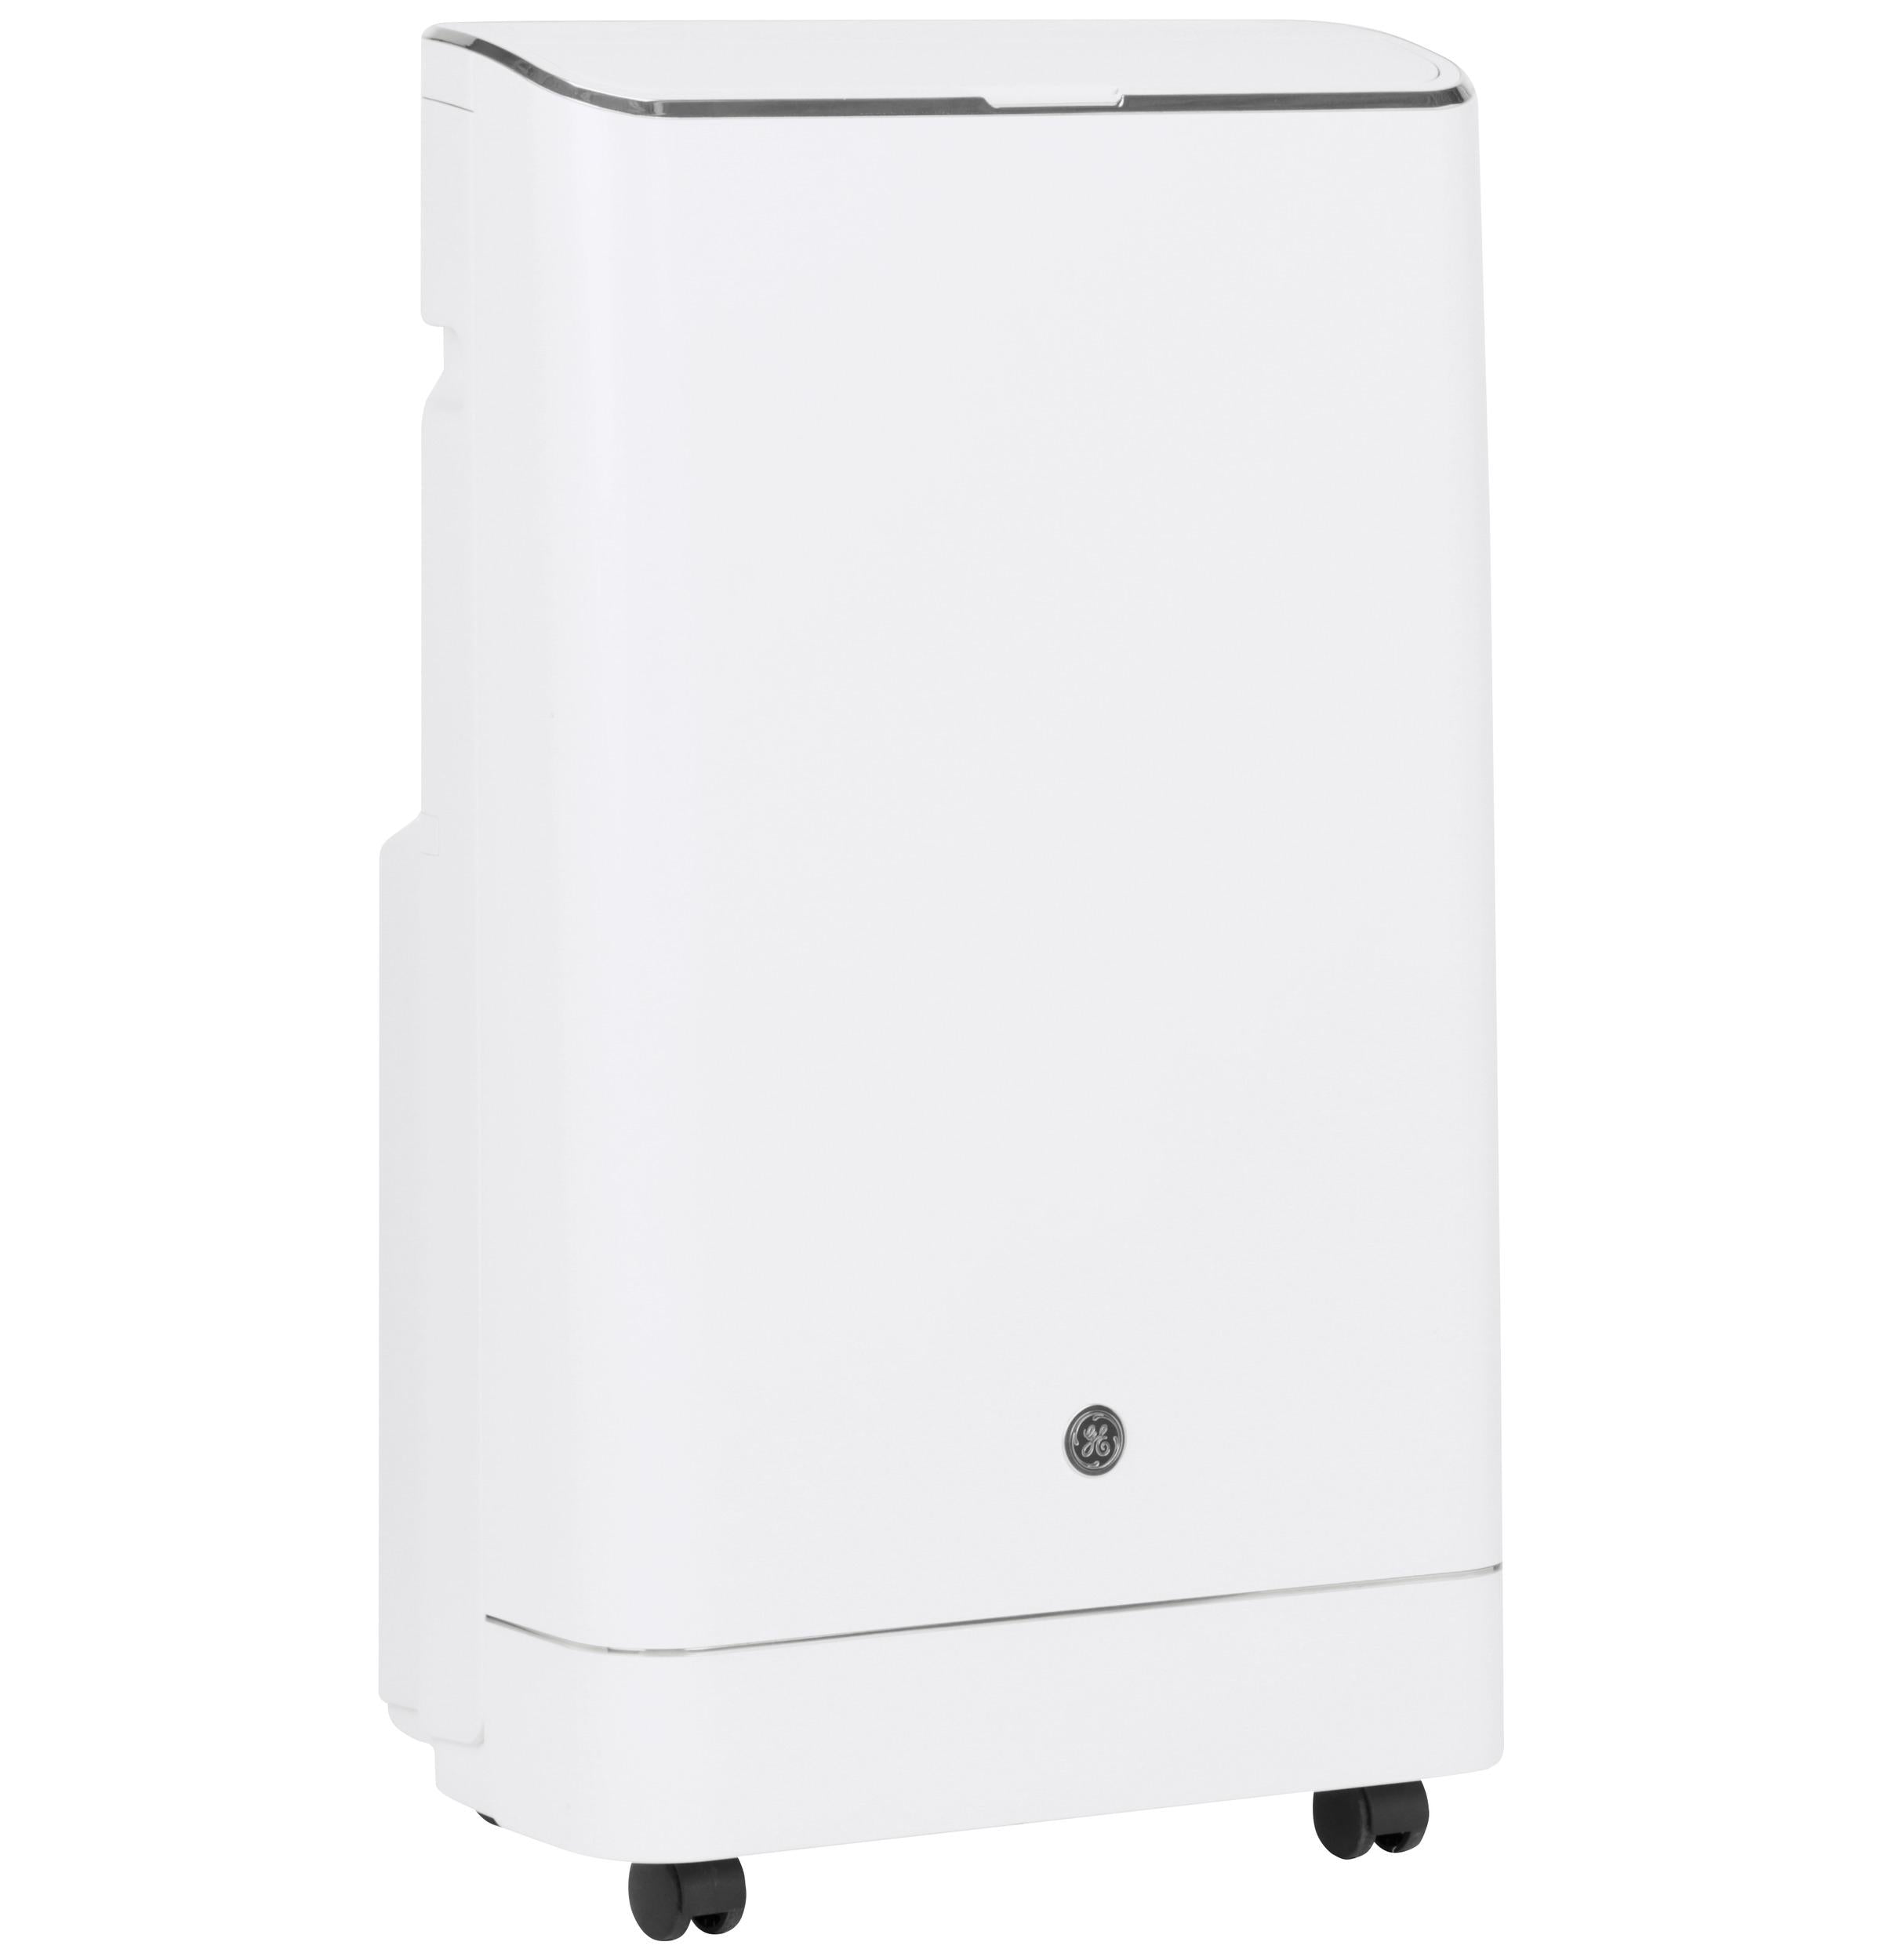 GE® 14,000 BTU Portable Air Conditioner for Medium Rooms up to 550 sq ft. (9,850 BTU SACC)